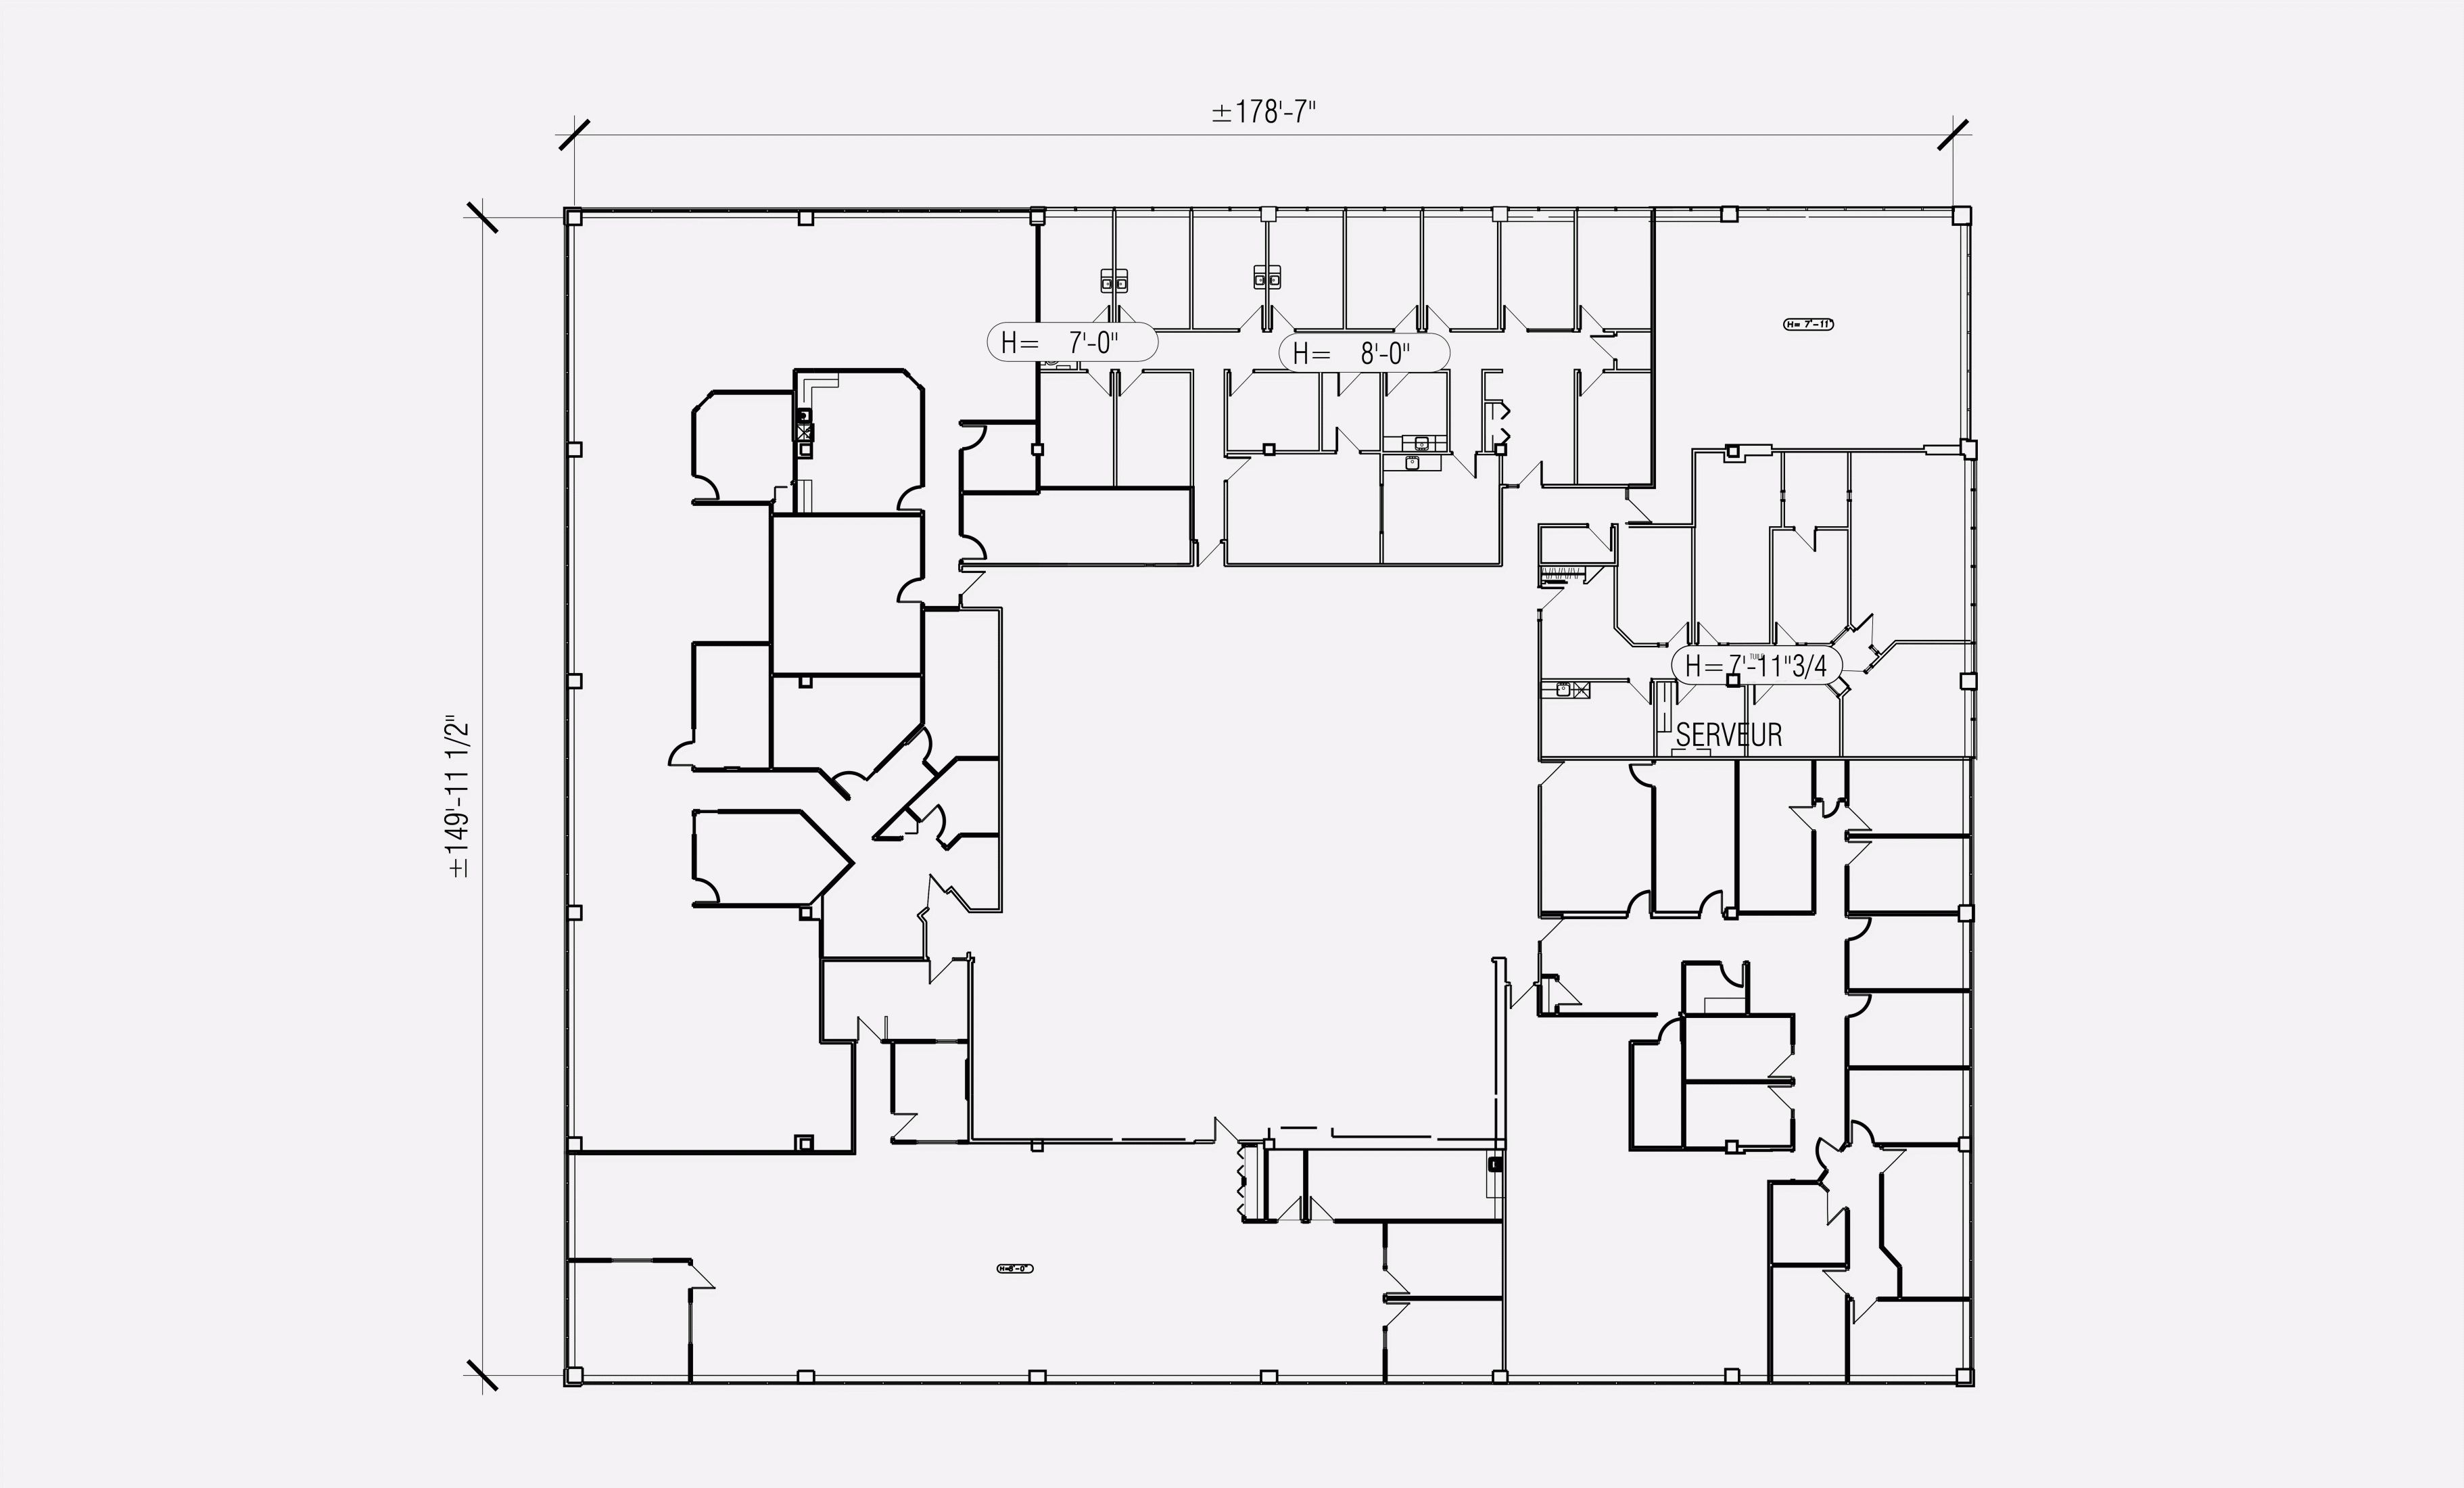 4th Floor - Plan 1